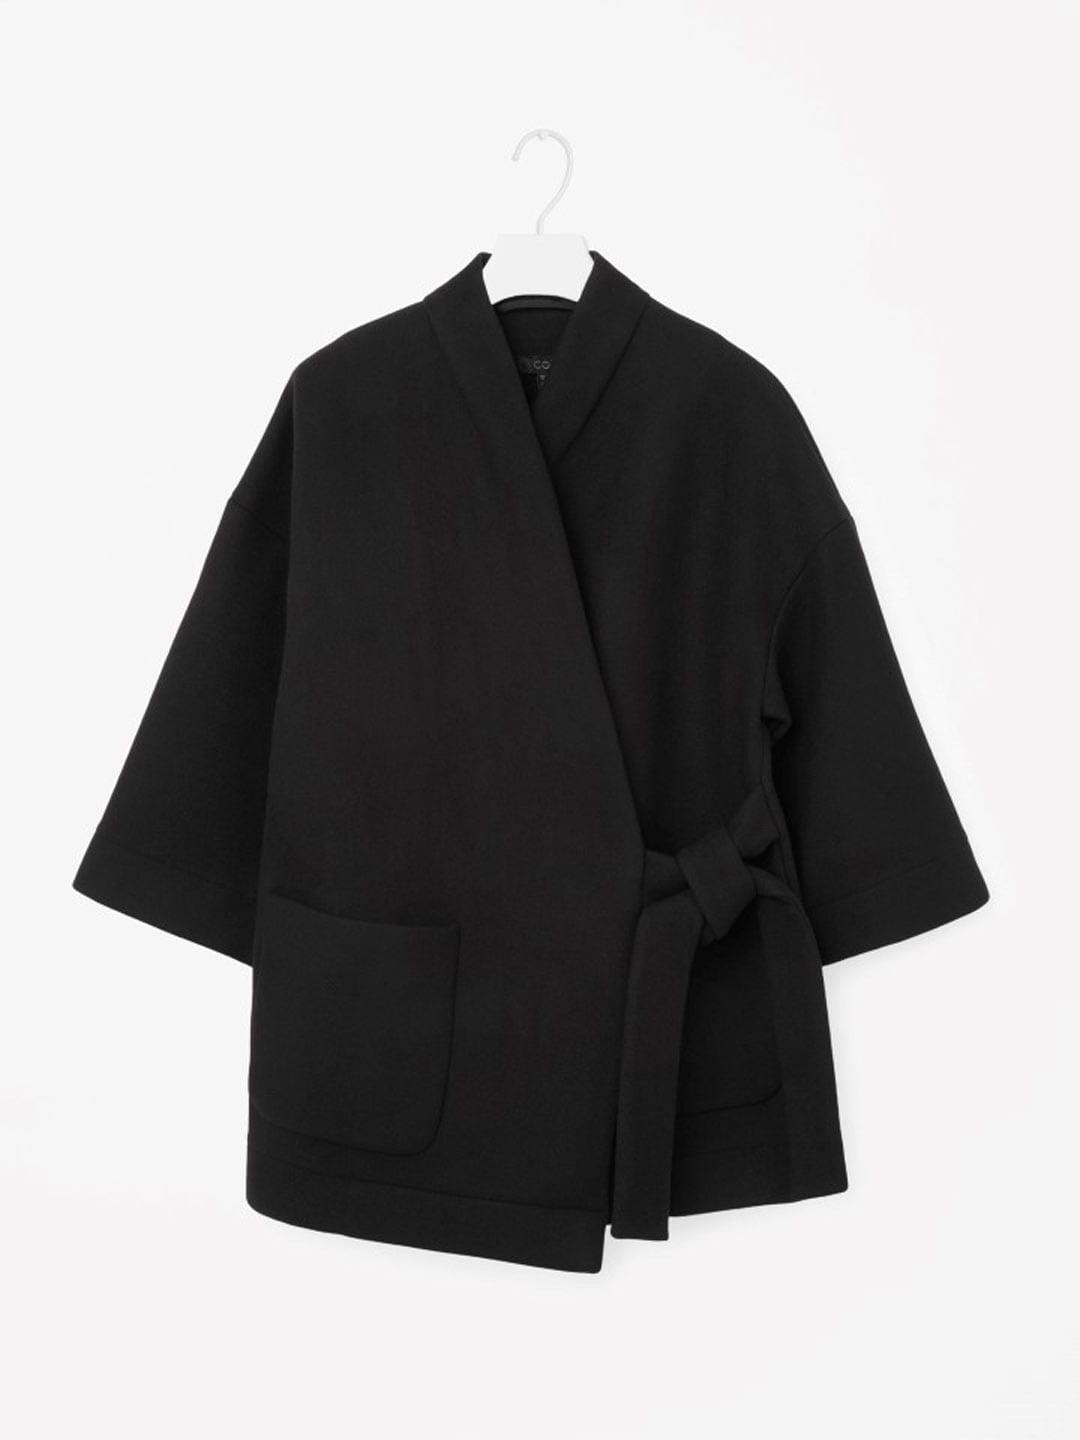 Best AW16 High Street Winter Coats | Style&Minimalism